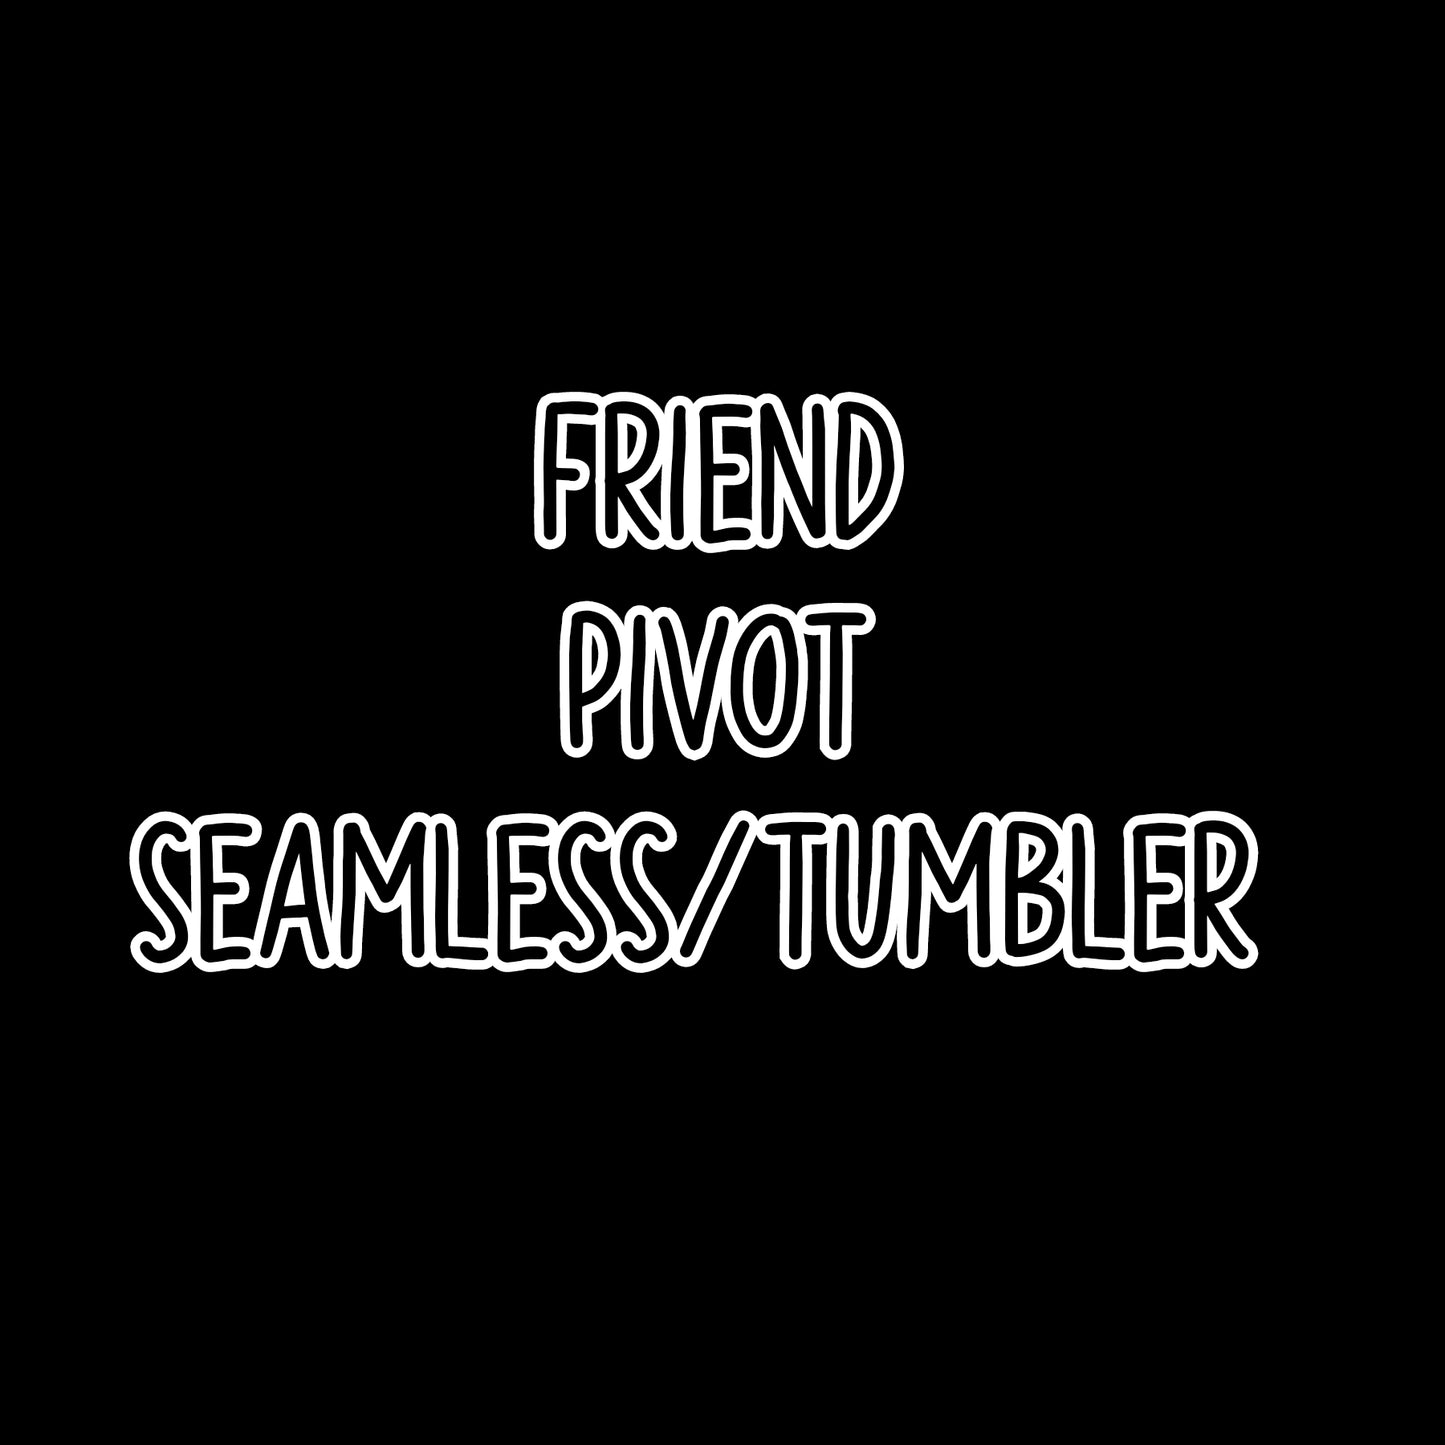 Friend Pivot Seamless/Tumbler